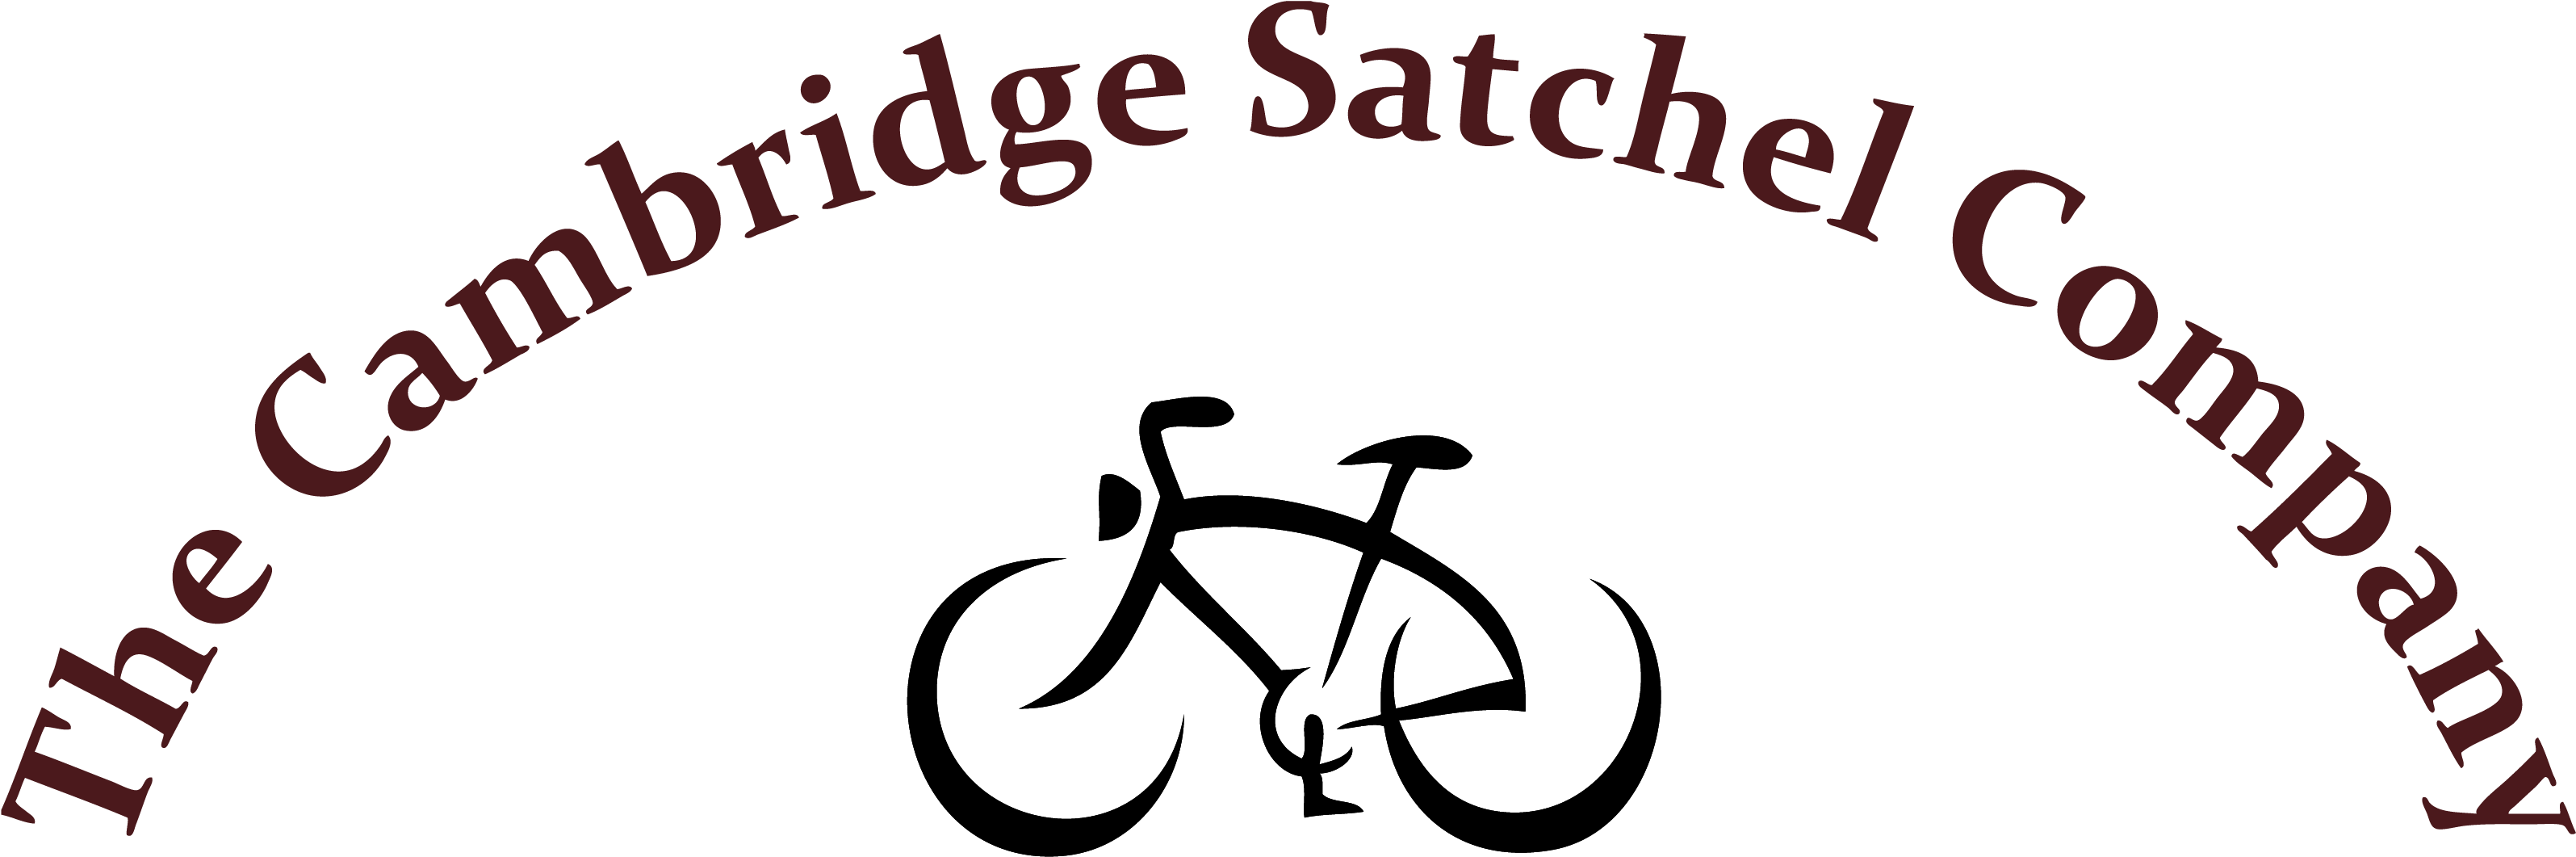 The Cambridge Satchel Company - Cambridge Satchel Company Logo (3209x1074)